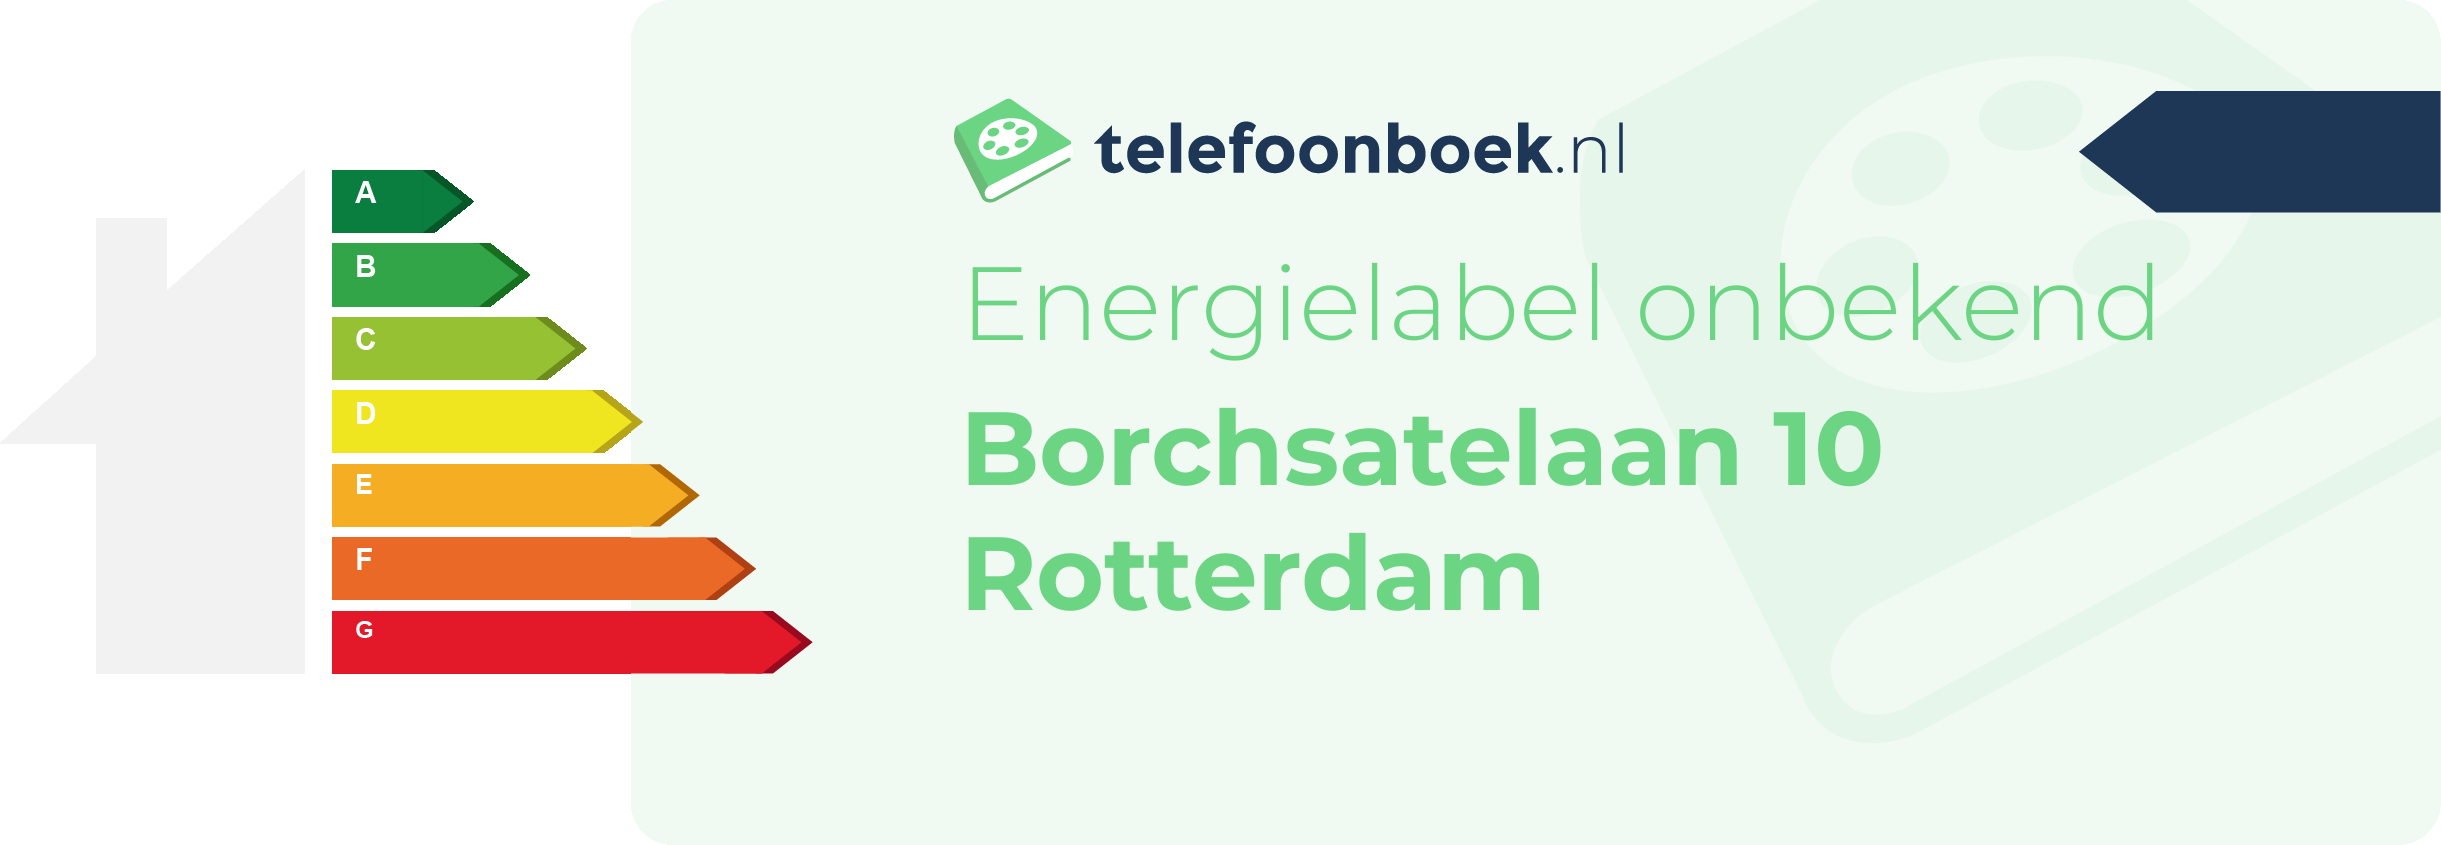 Energielabel Borchsatelaan 10 Rotterdam